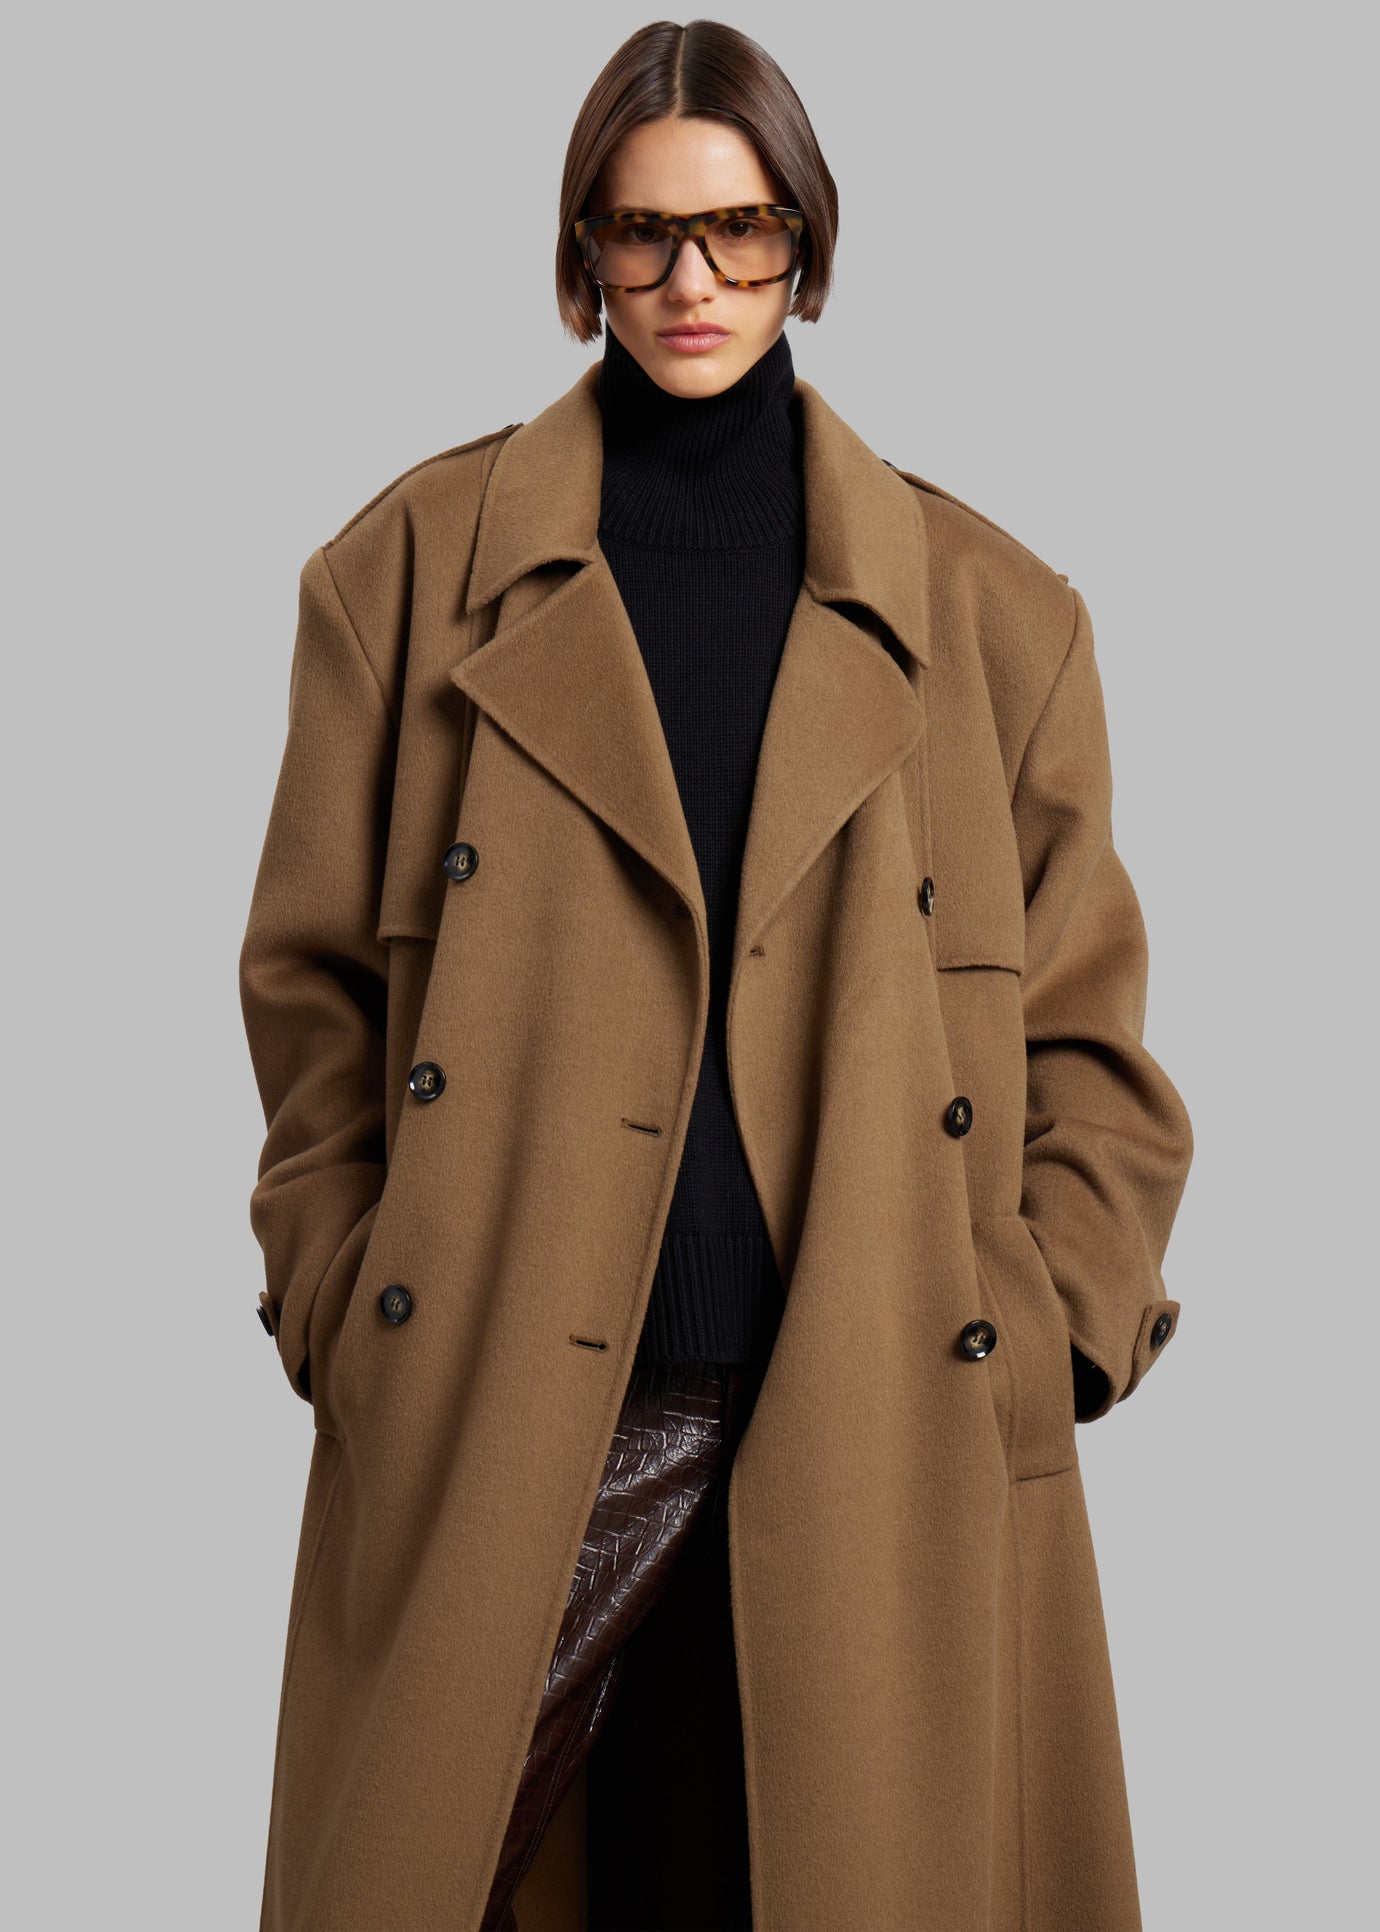 Women\'s Coats, Jackets, Trench Shop – The 2 Page Frankie & – Blazer